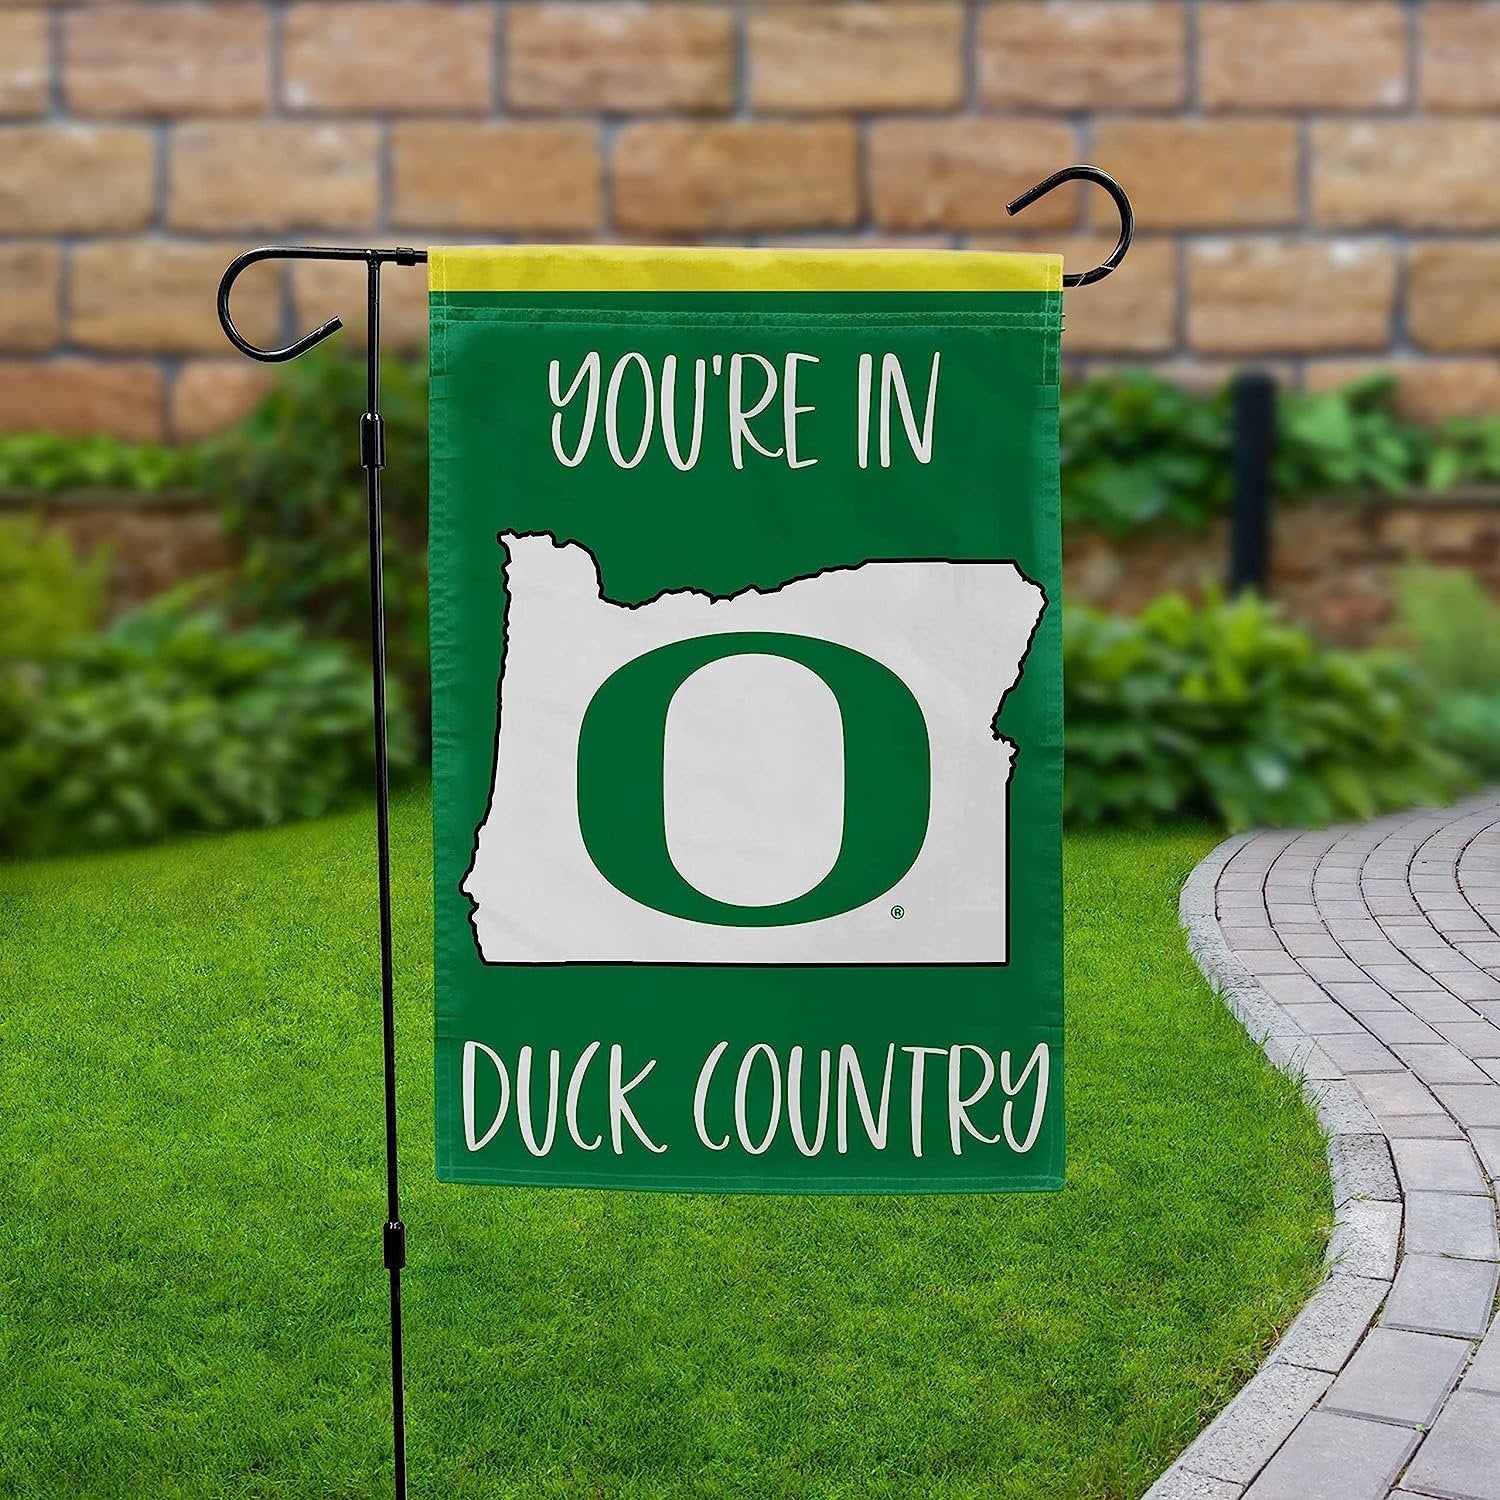 University of Oregon Ducks Double Sided Garden Flag Banner 12x18 Inch Country Design